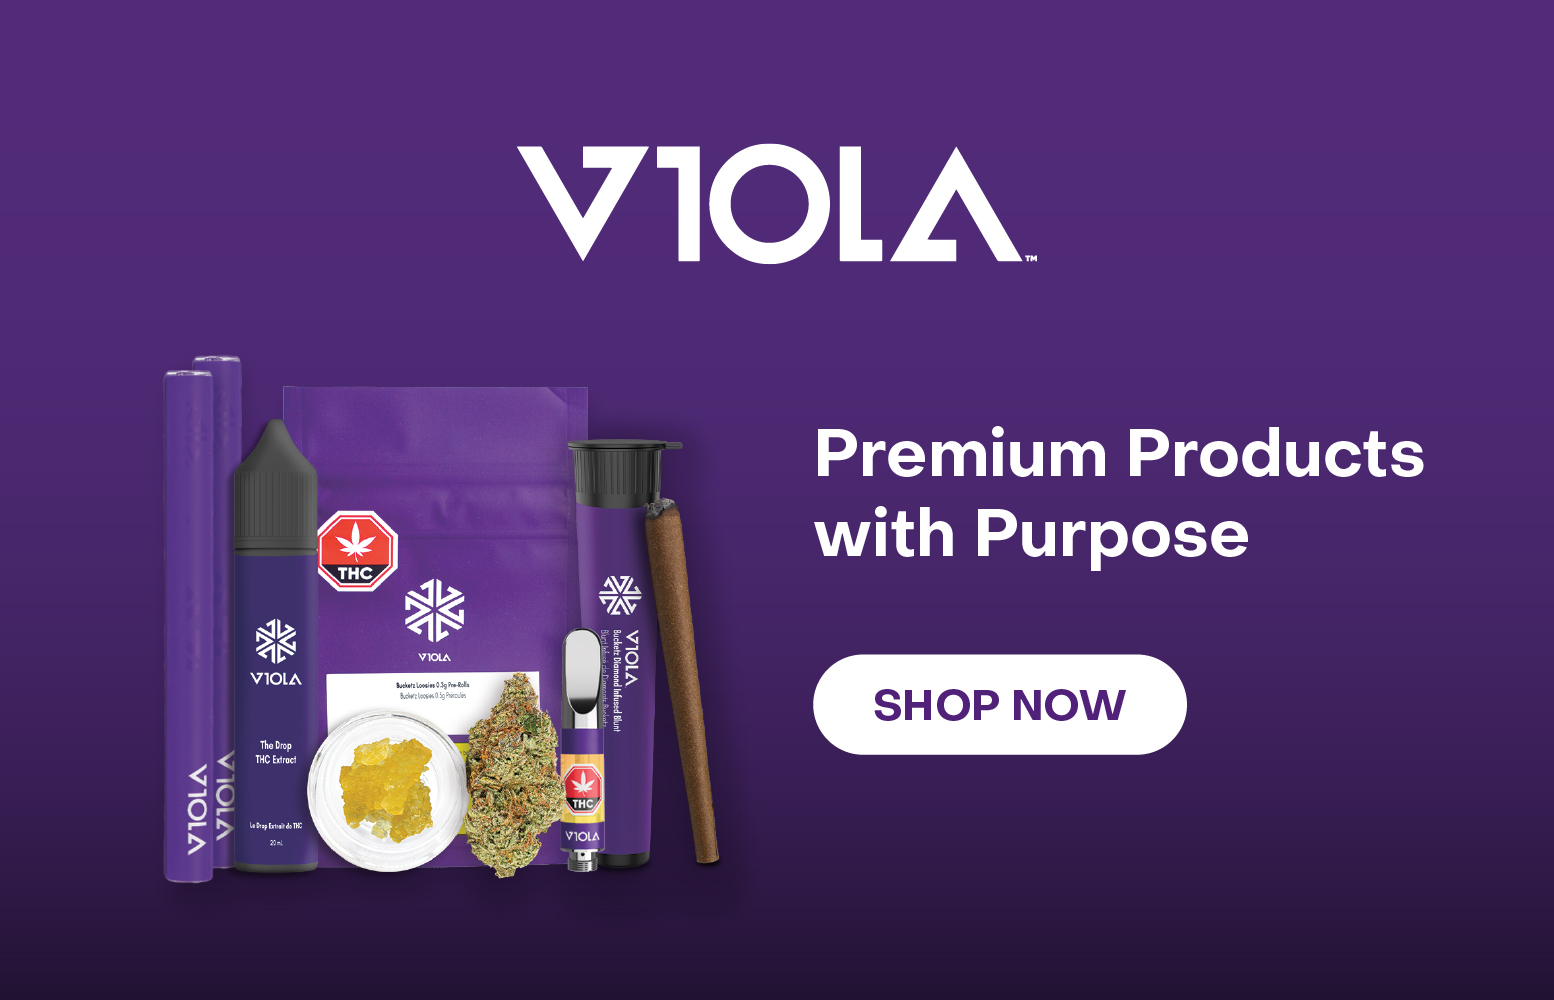 Viola. Premium Products with Purpose.